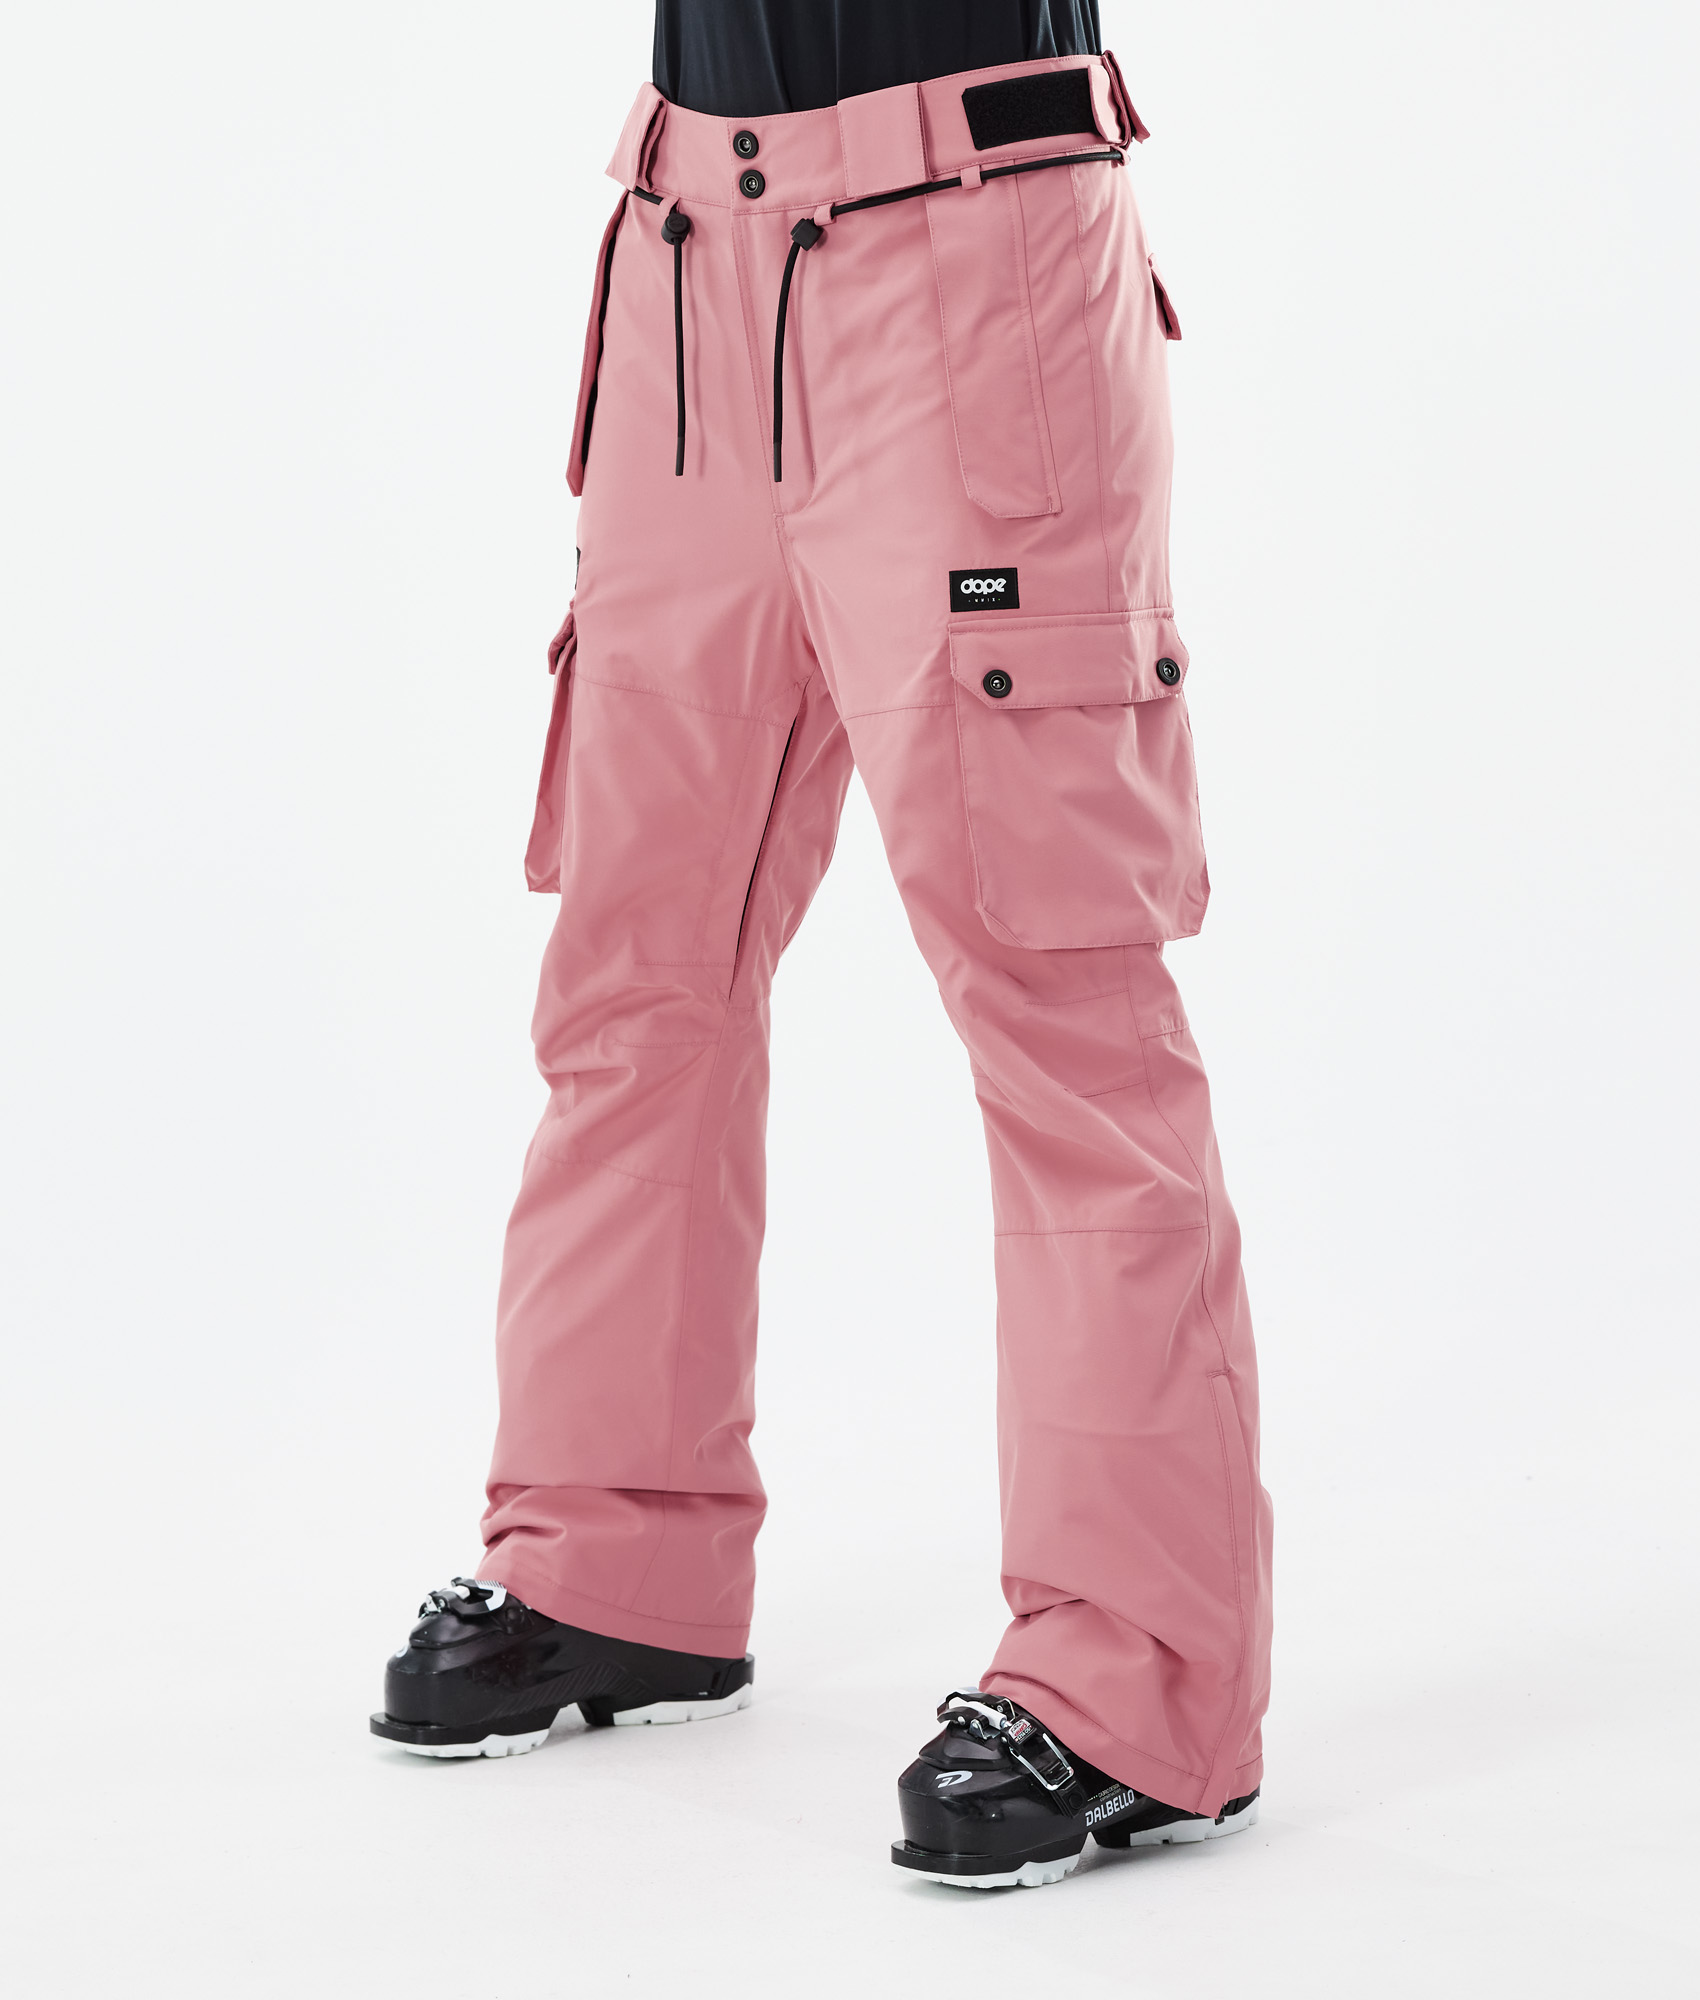 Weedo Snow pants pink